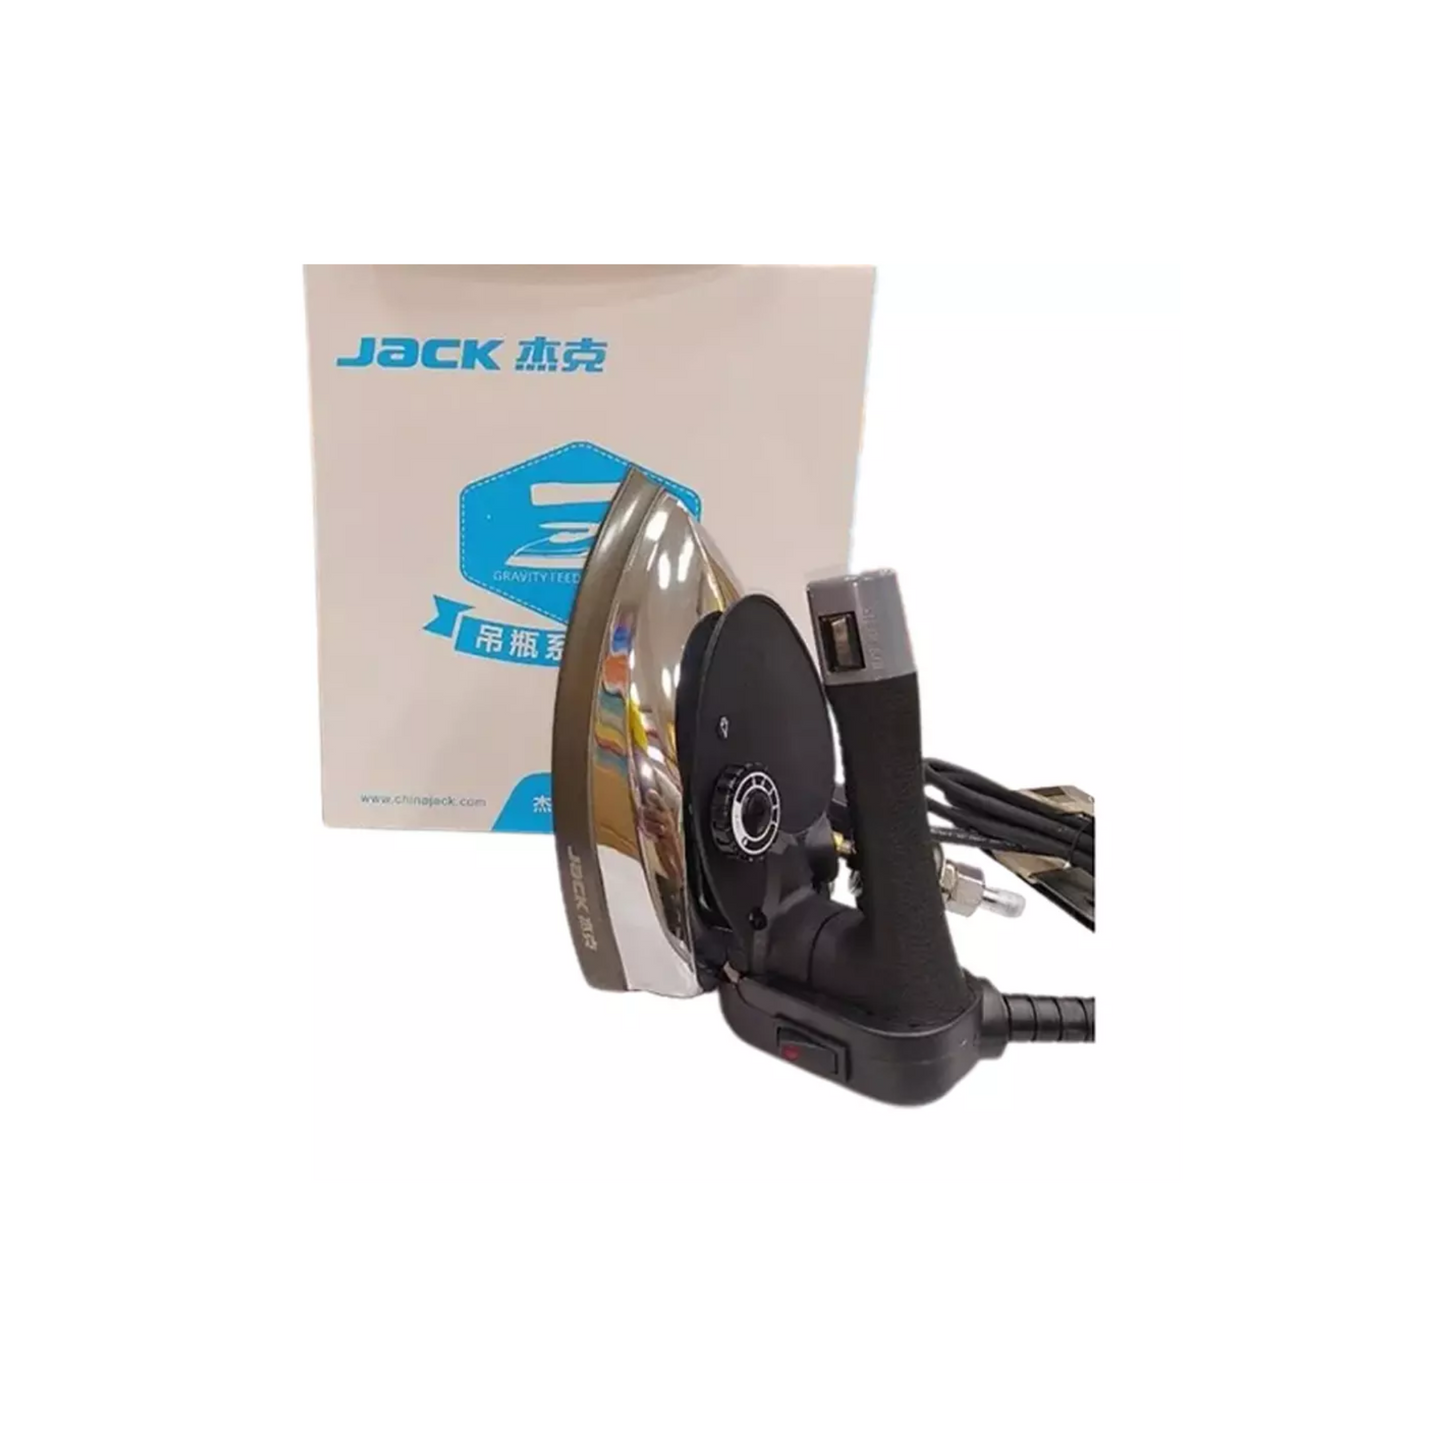 Jack JK-300L 1450W grey - Steam iron - Black - Front view